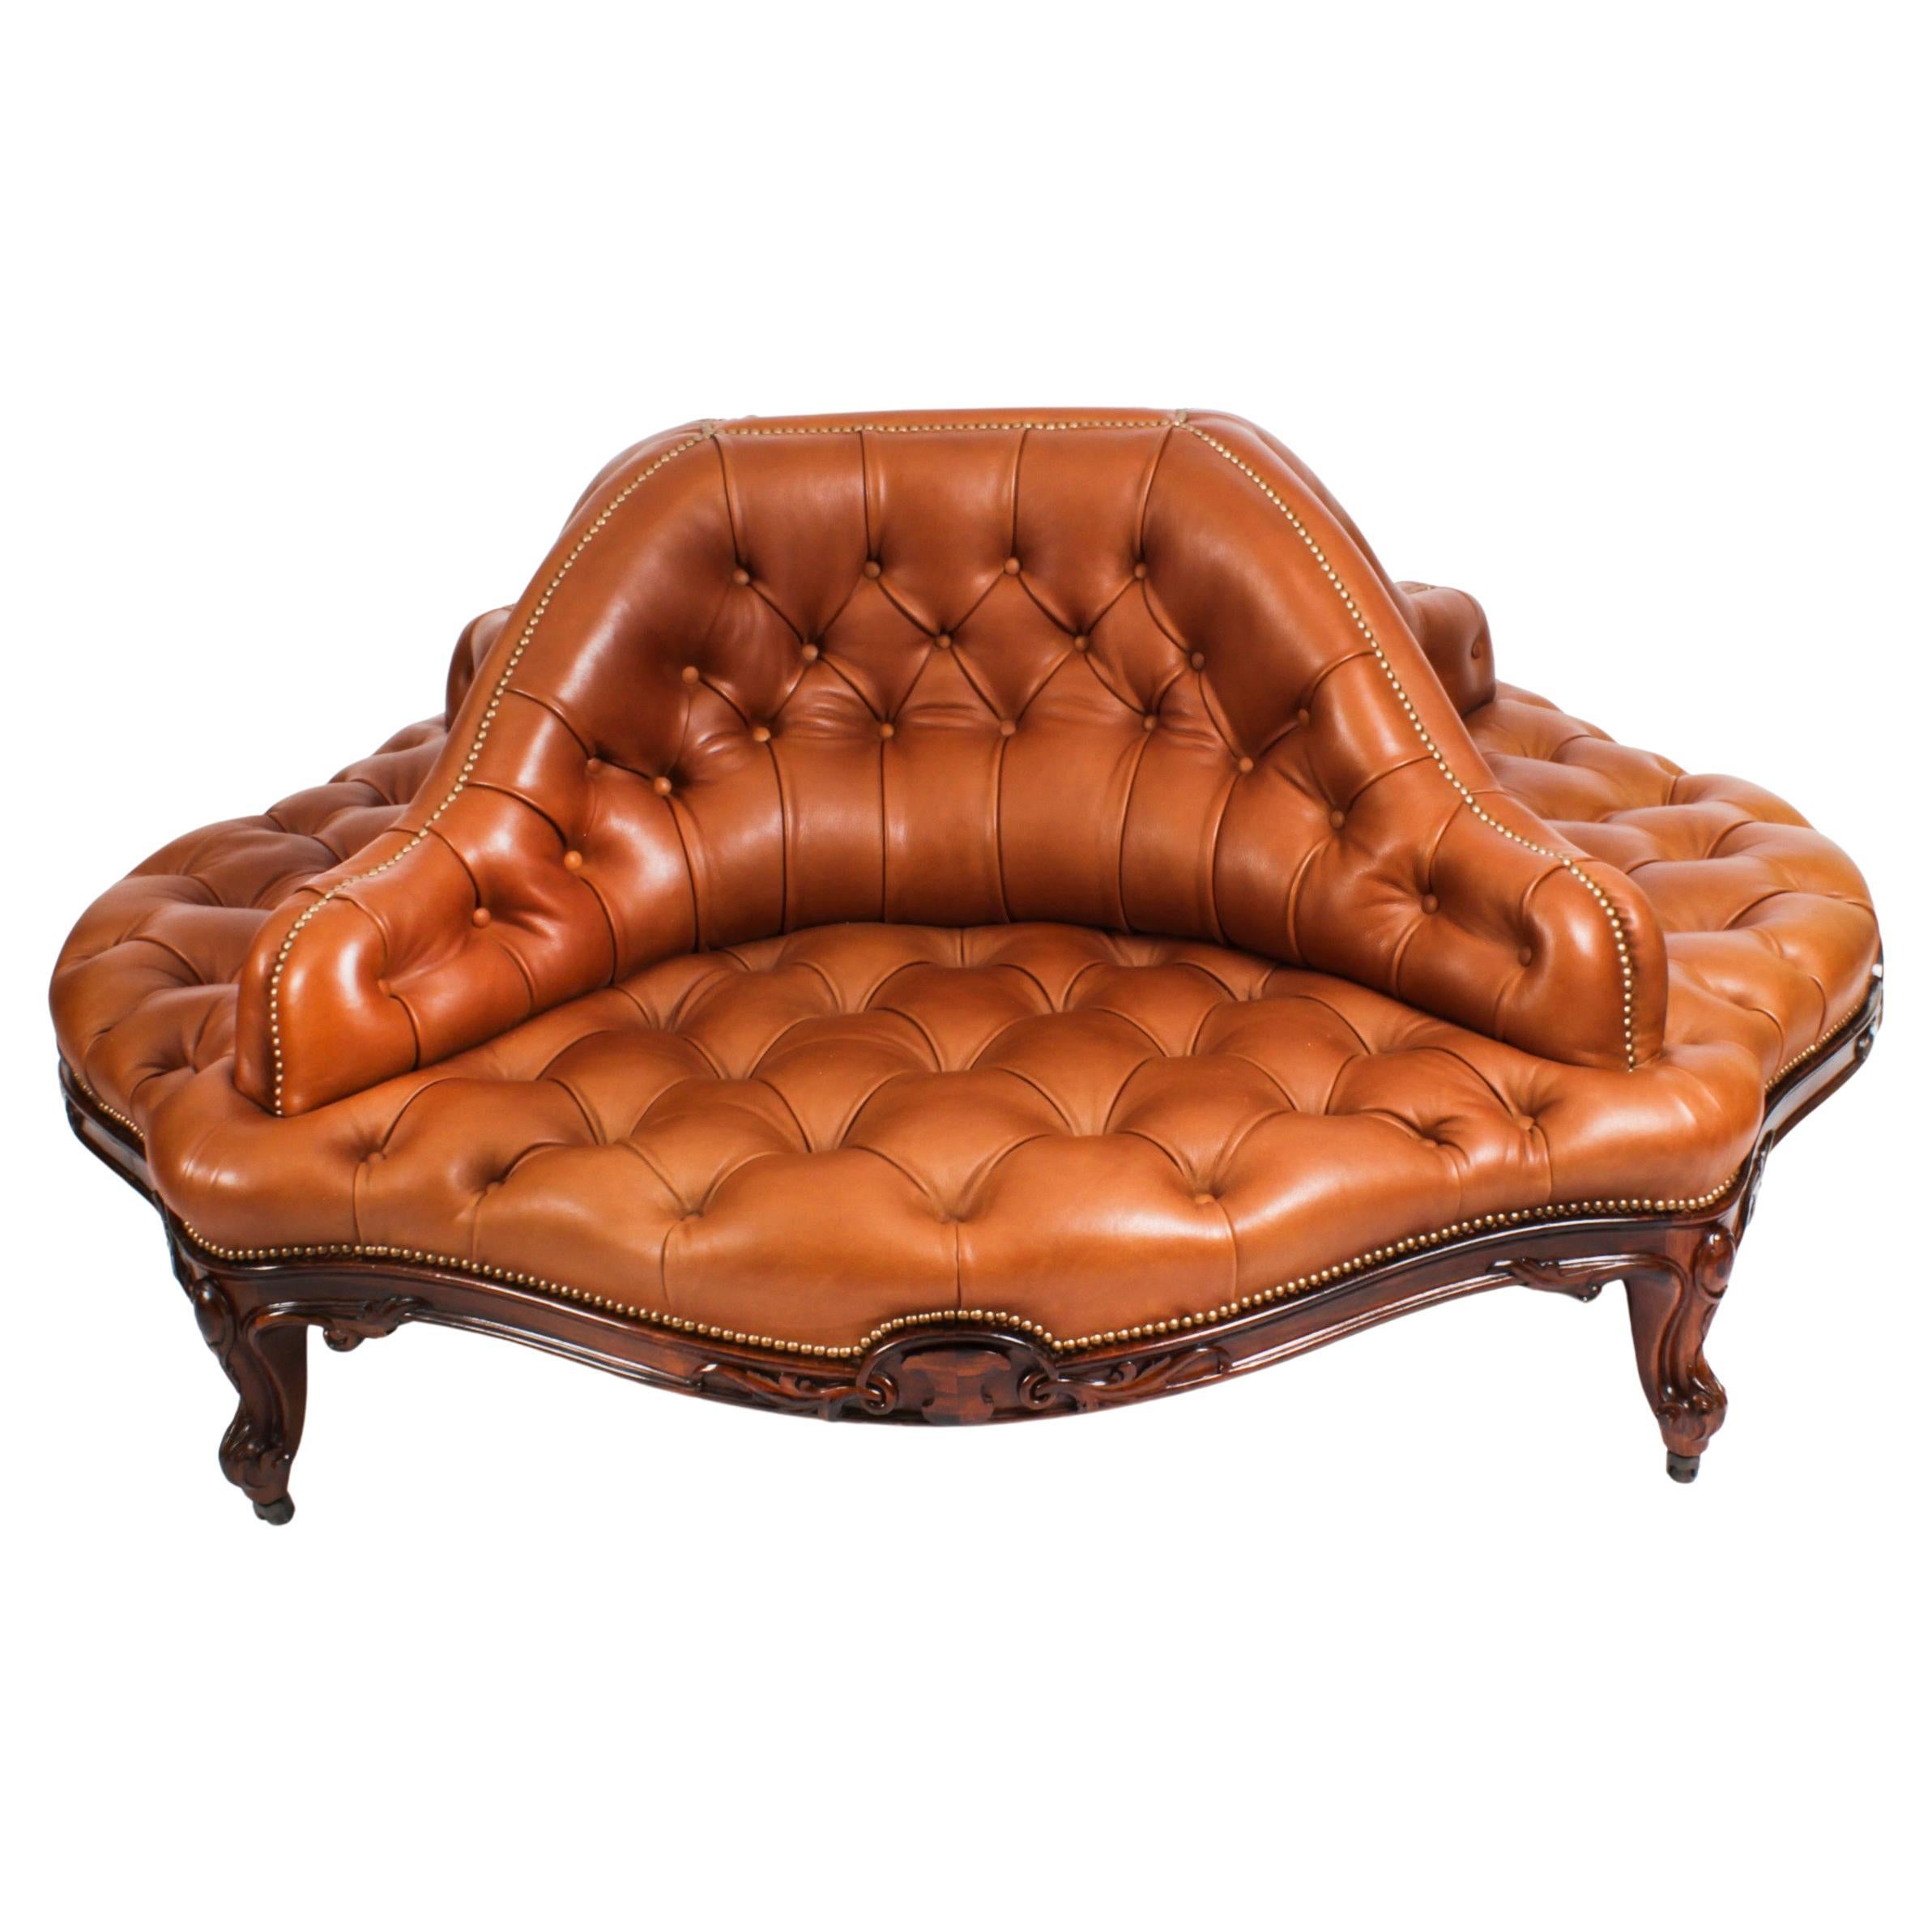 Antique Victorian Leather Love Seat Conversation Settee Sofa 19th C